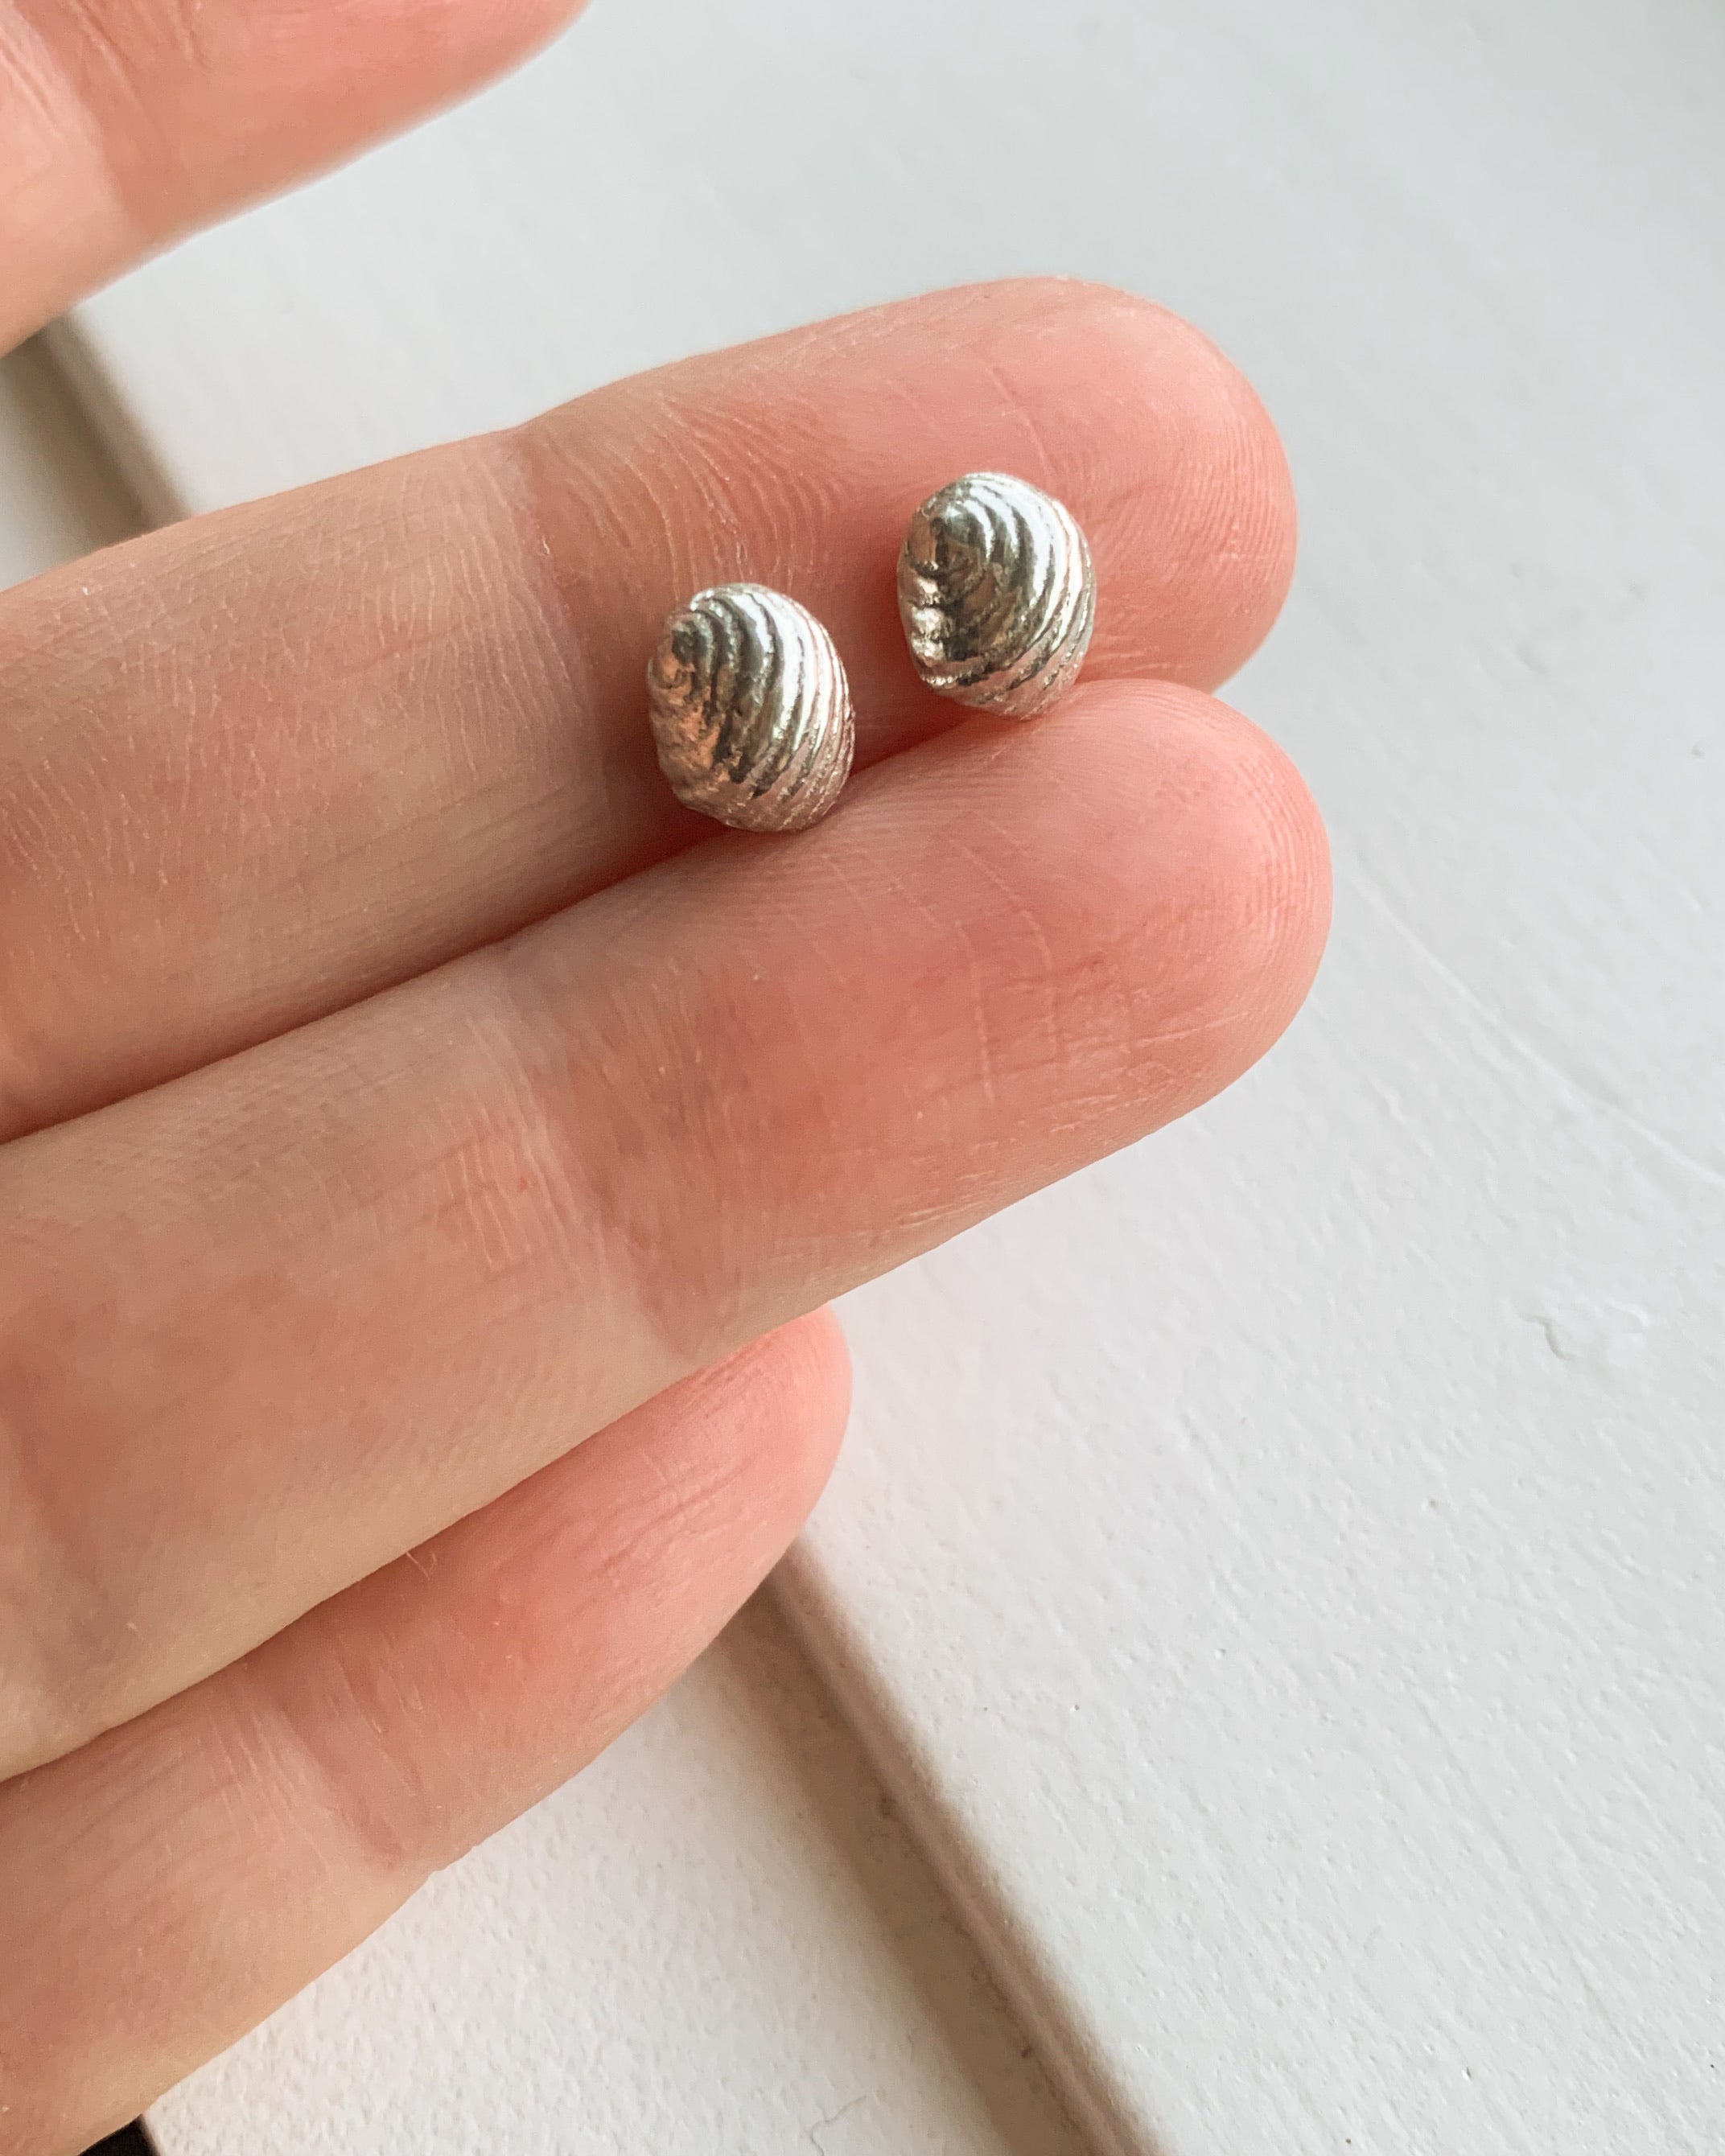 small silver sea shell stud earrings held between two fingers